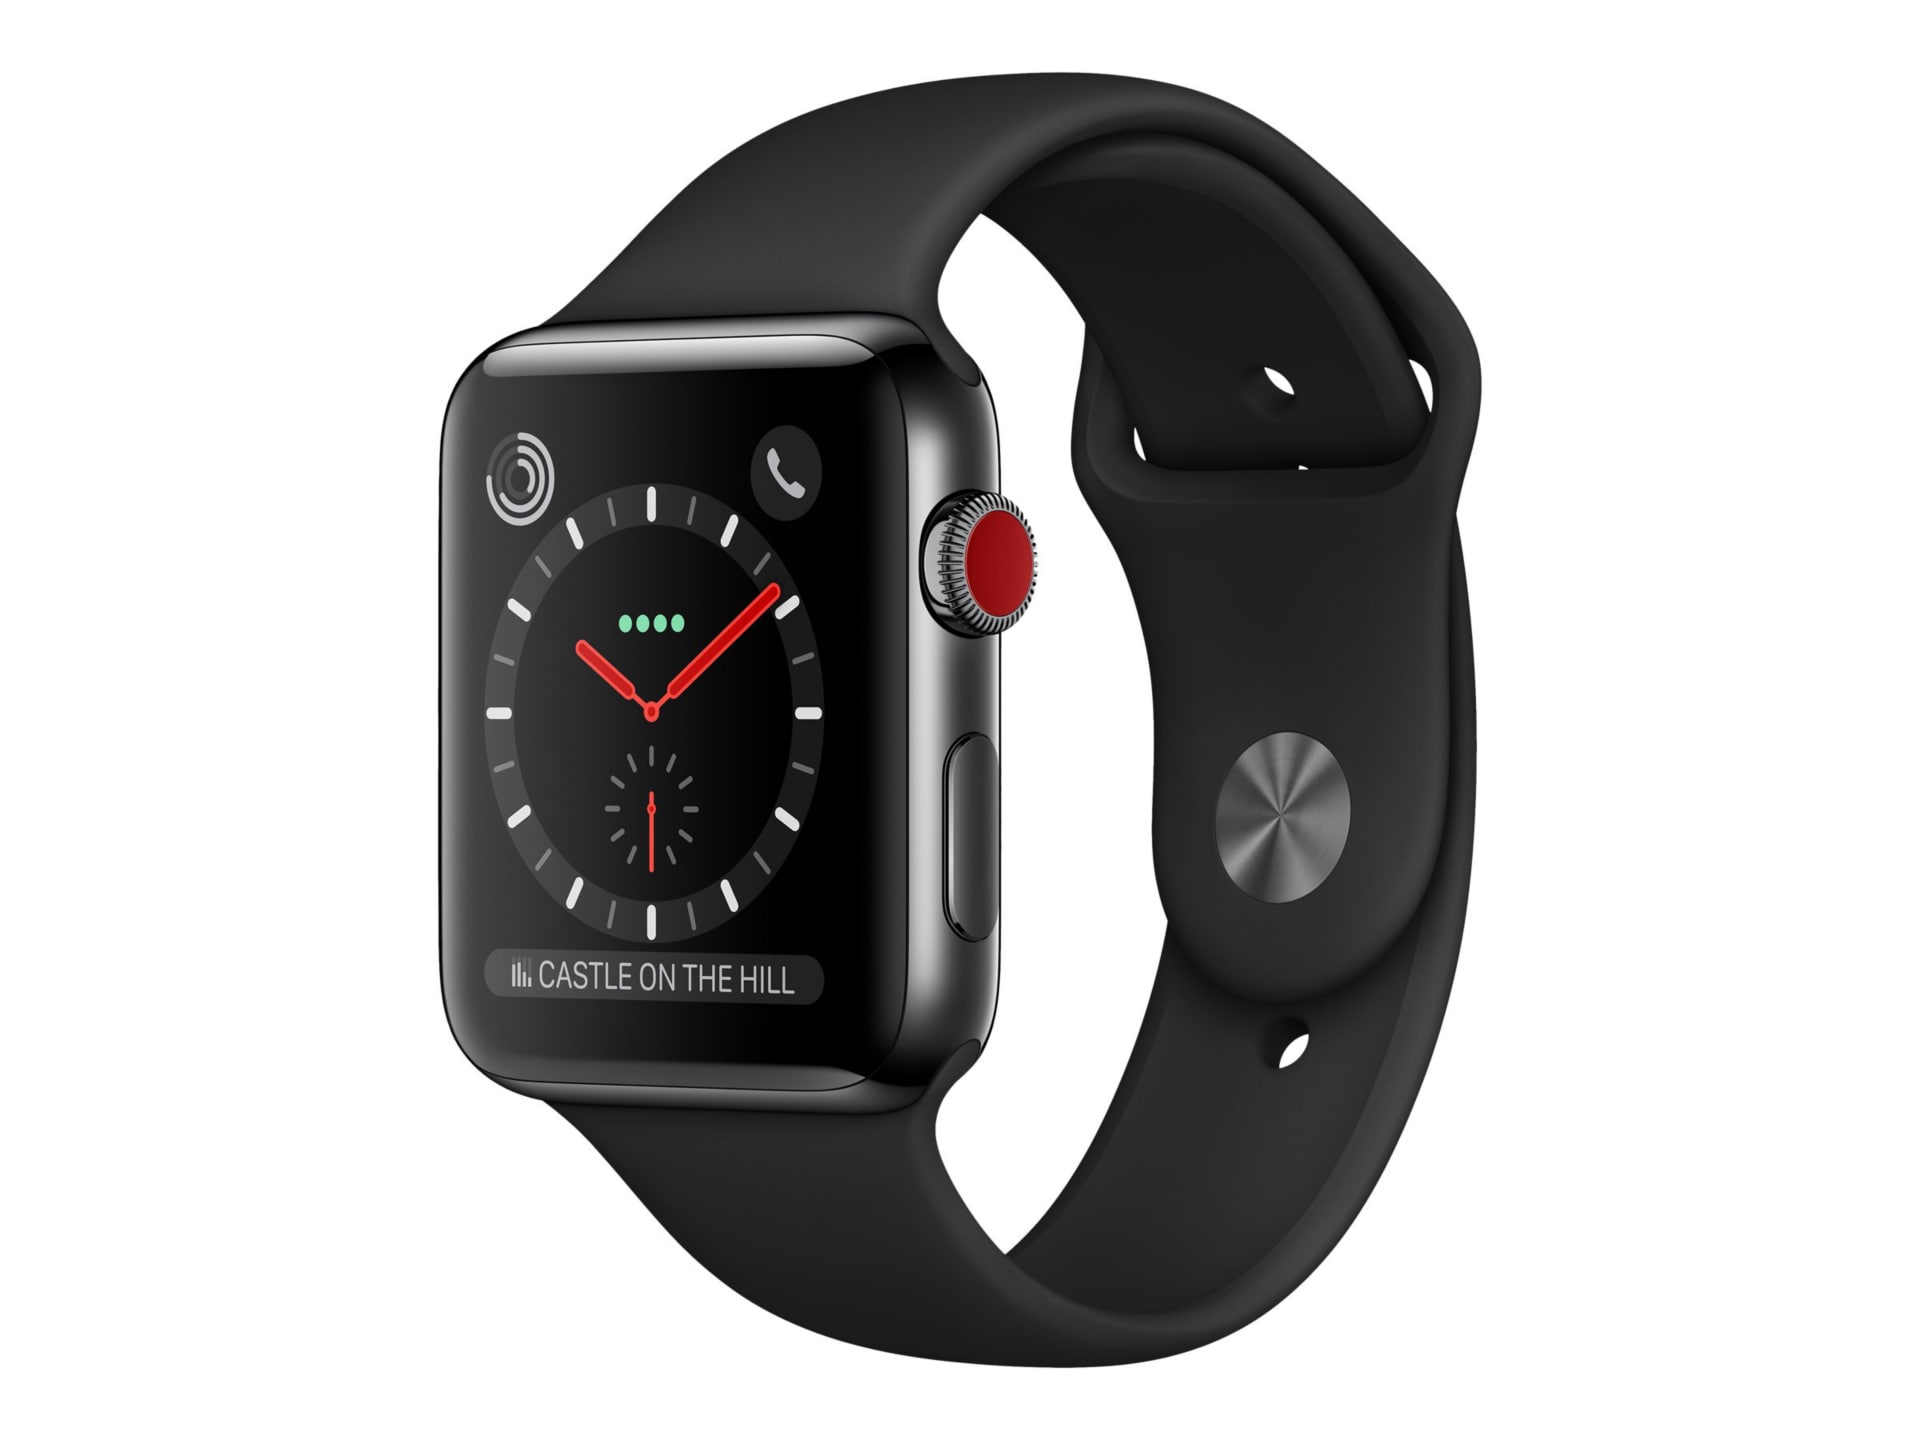 Apple Watch Series 3 (GPS + Cellular) - space black stainless steel - smart